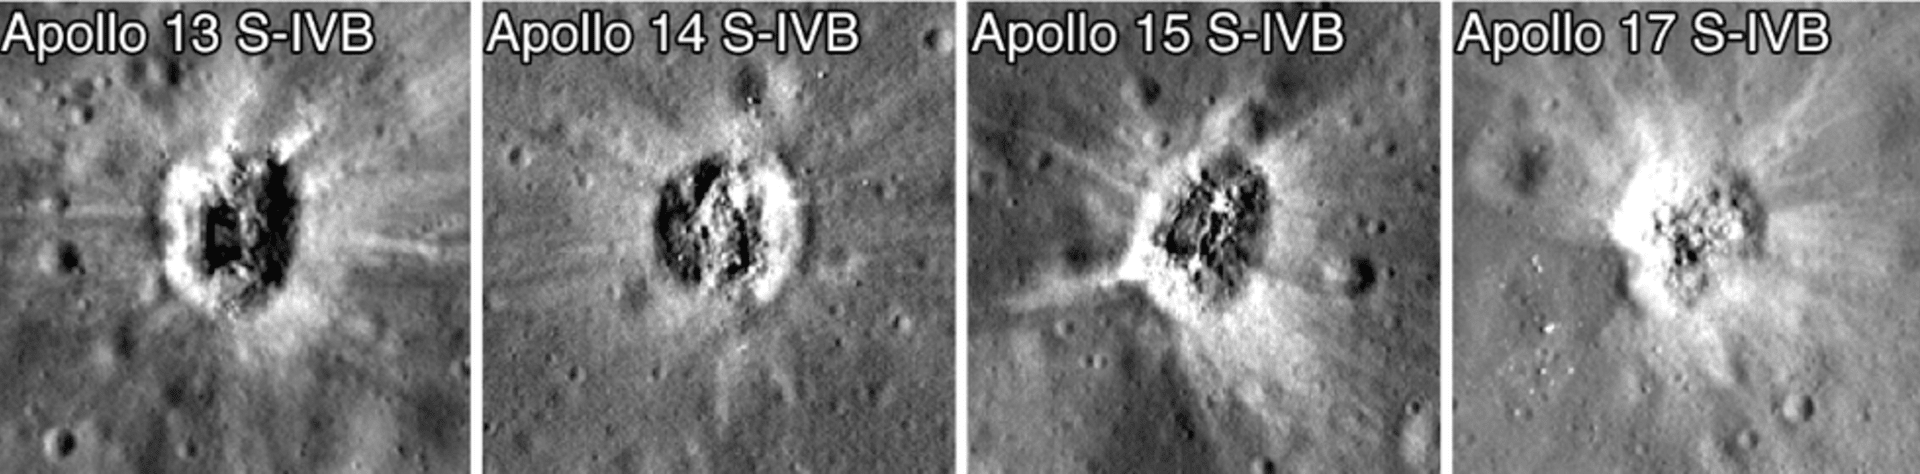 Krátery po dopadu z misí Apollo